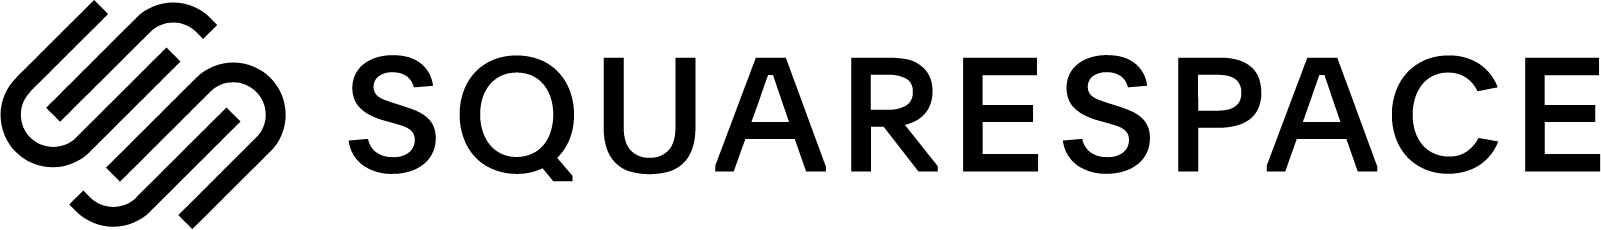 Squarespace logo large (transparent PNG)